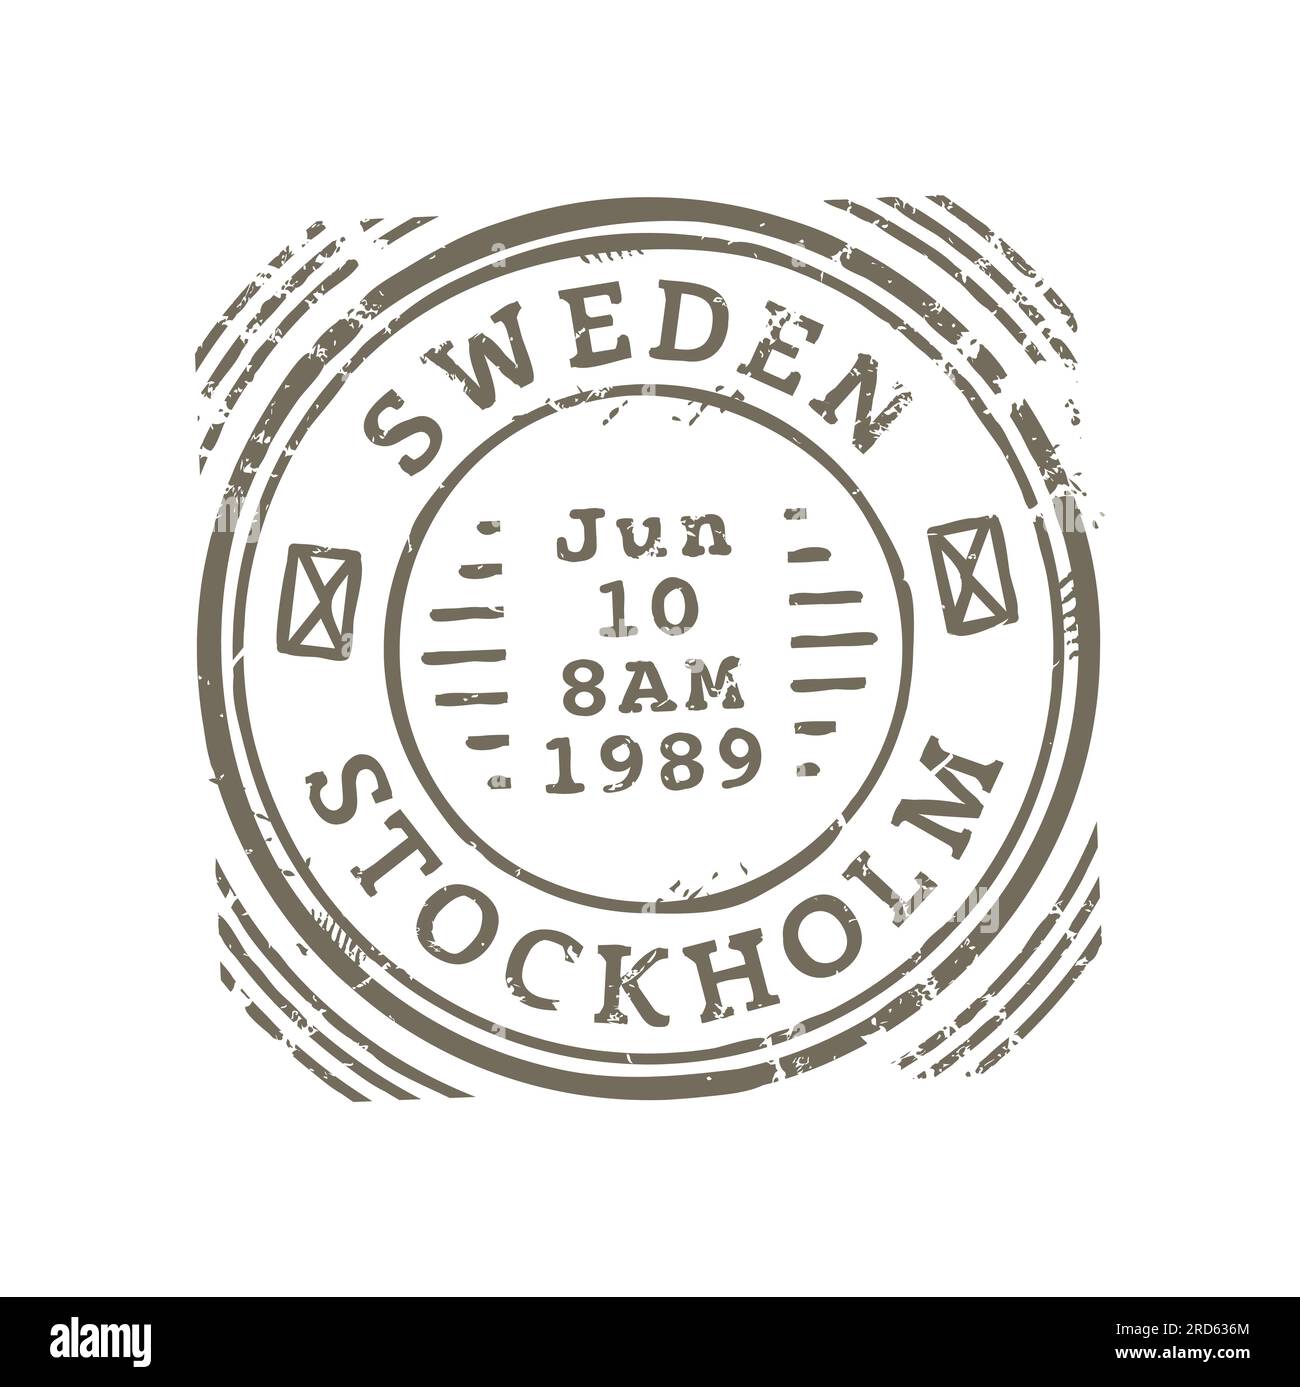 Stockholm Sweden postal seal, postmark on postcard round seal. Mail card delivery insignia, international vintage rubber stamp on postcard Stock Vector